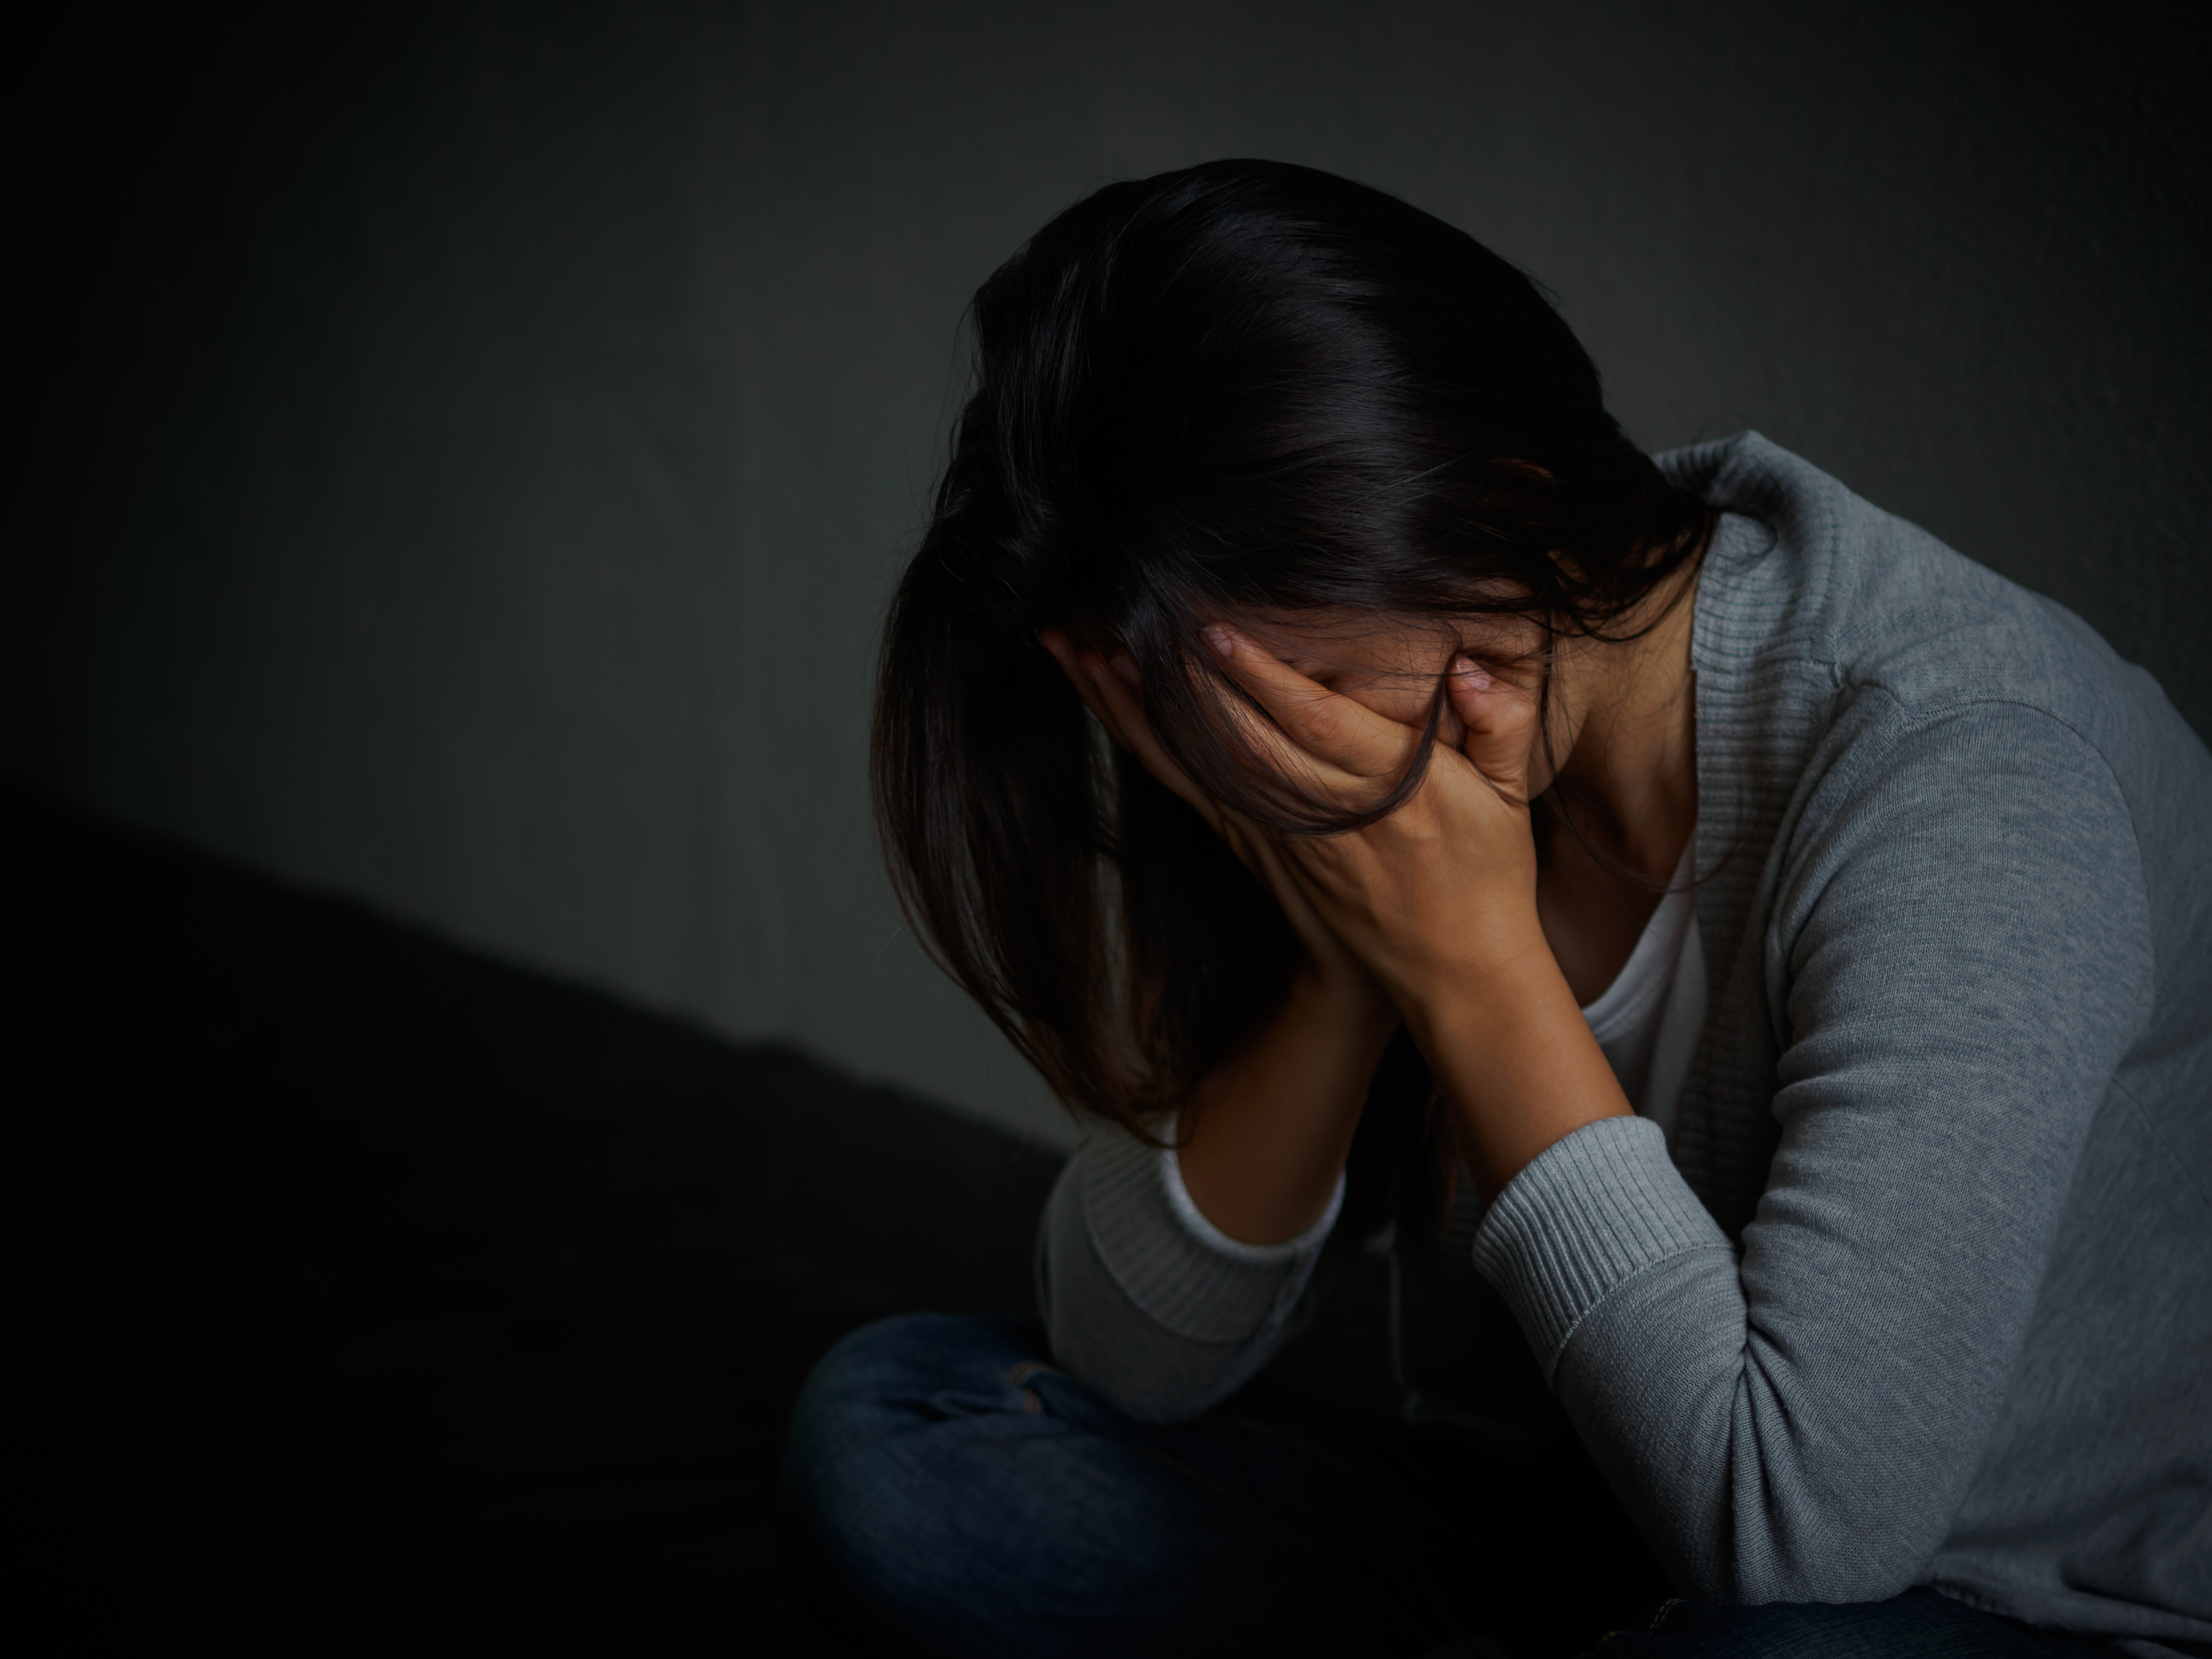 Mujer triste | Fuente: Shutterstock